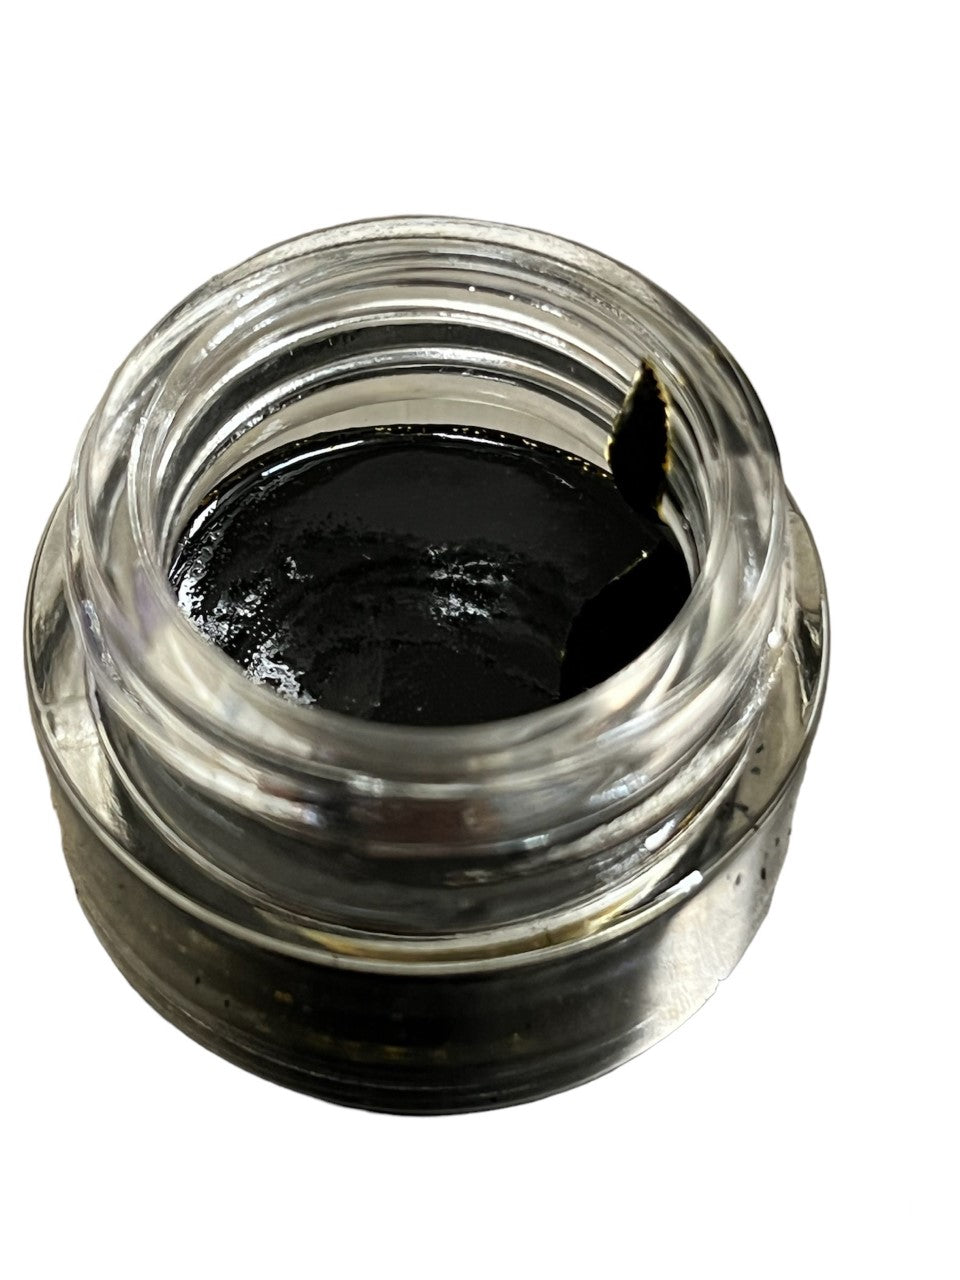 Six-Star Caviar: Vanilla Caviar Blended With Vanilla Extract